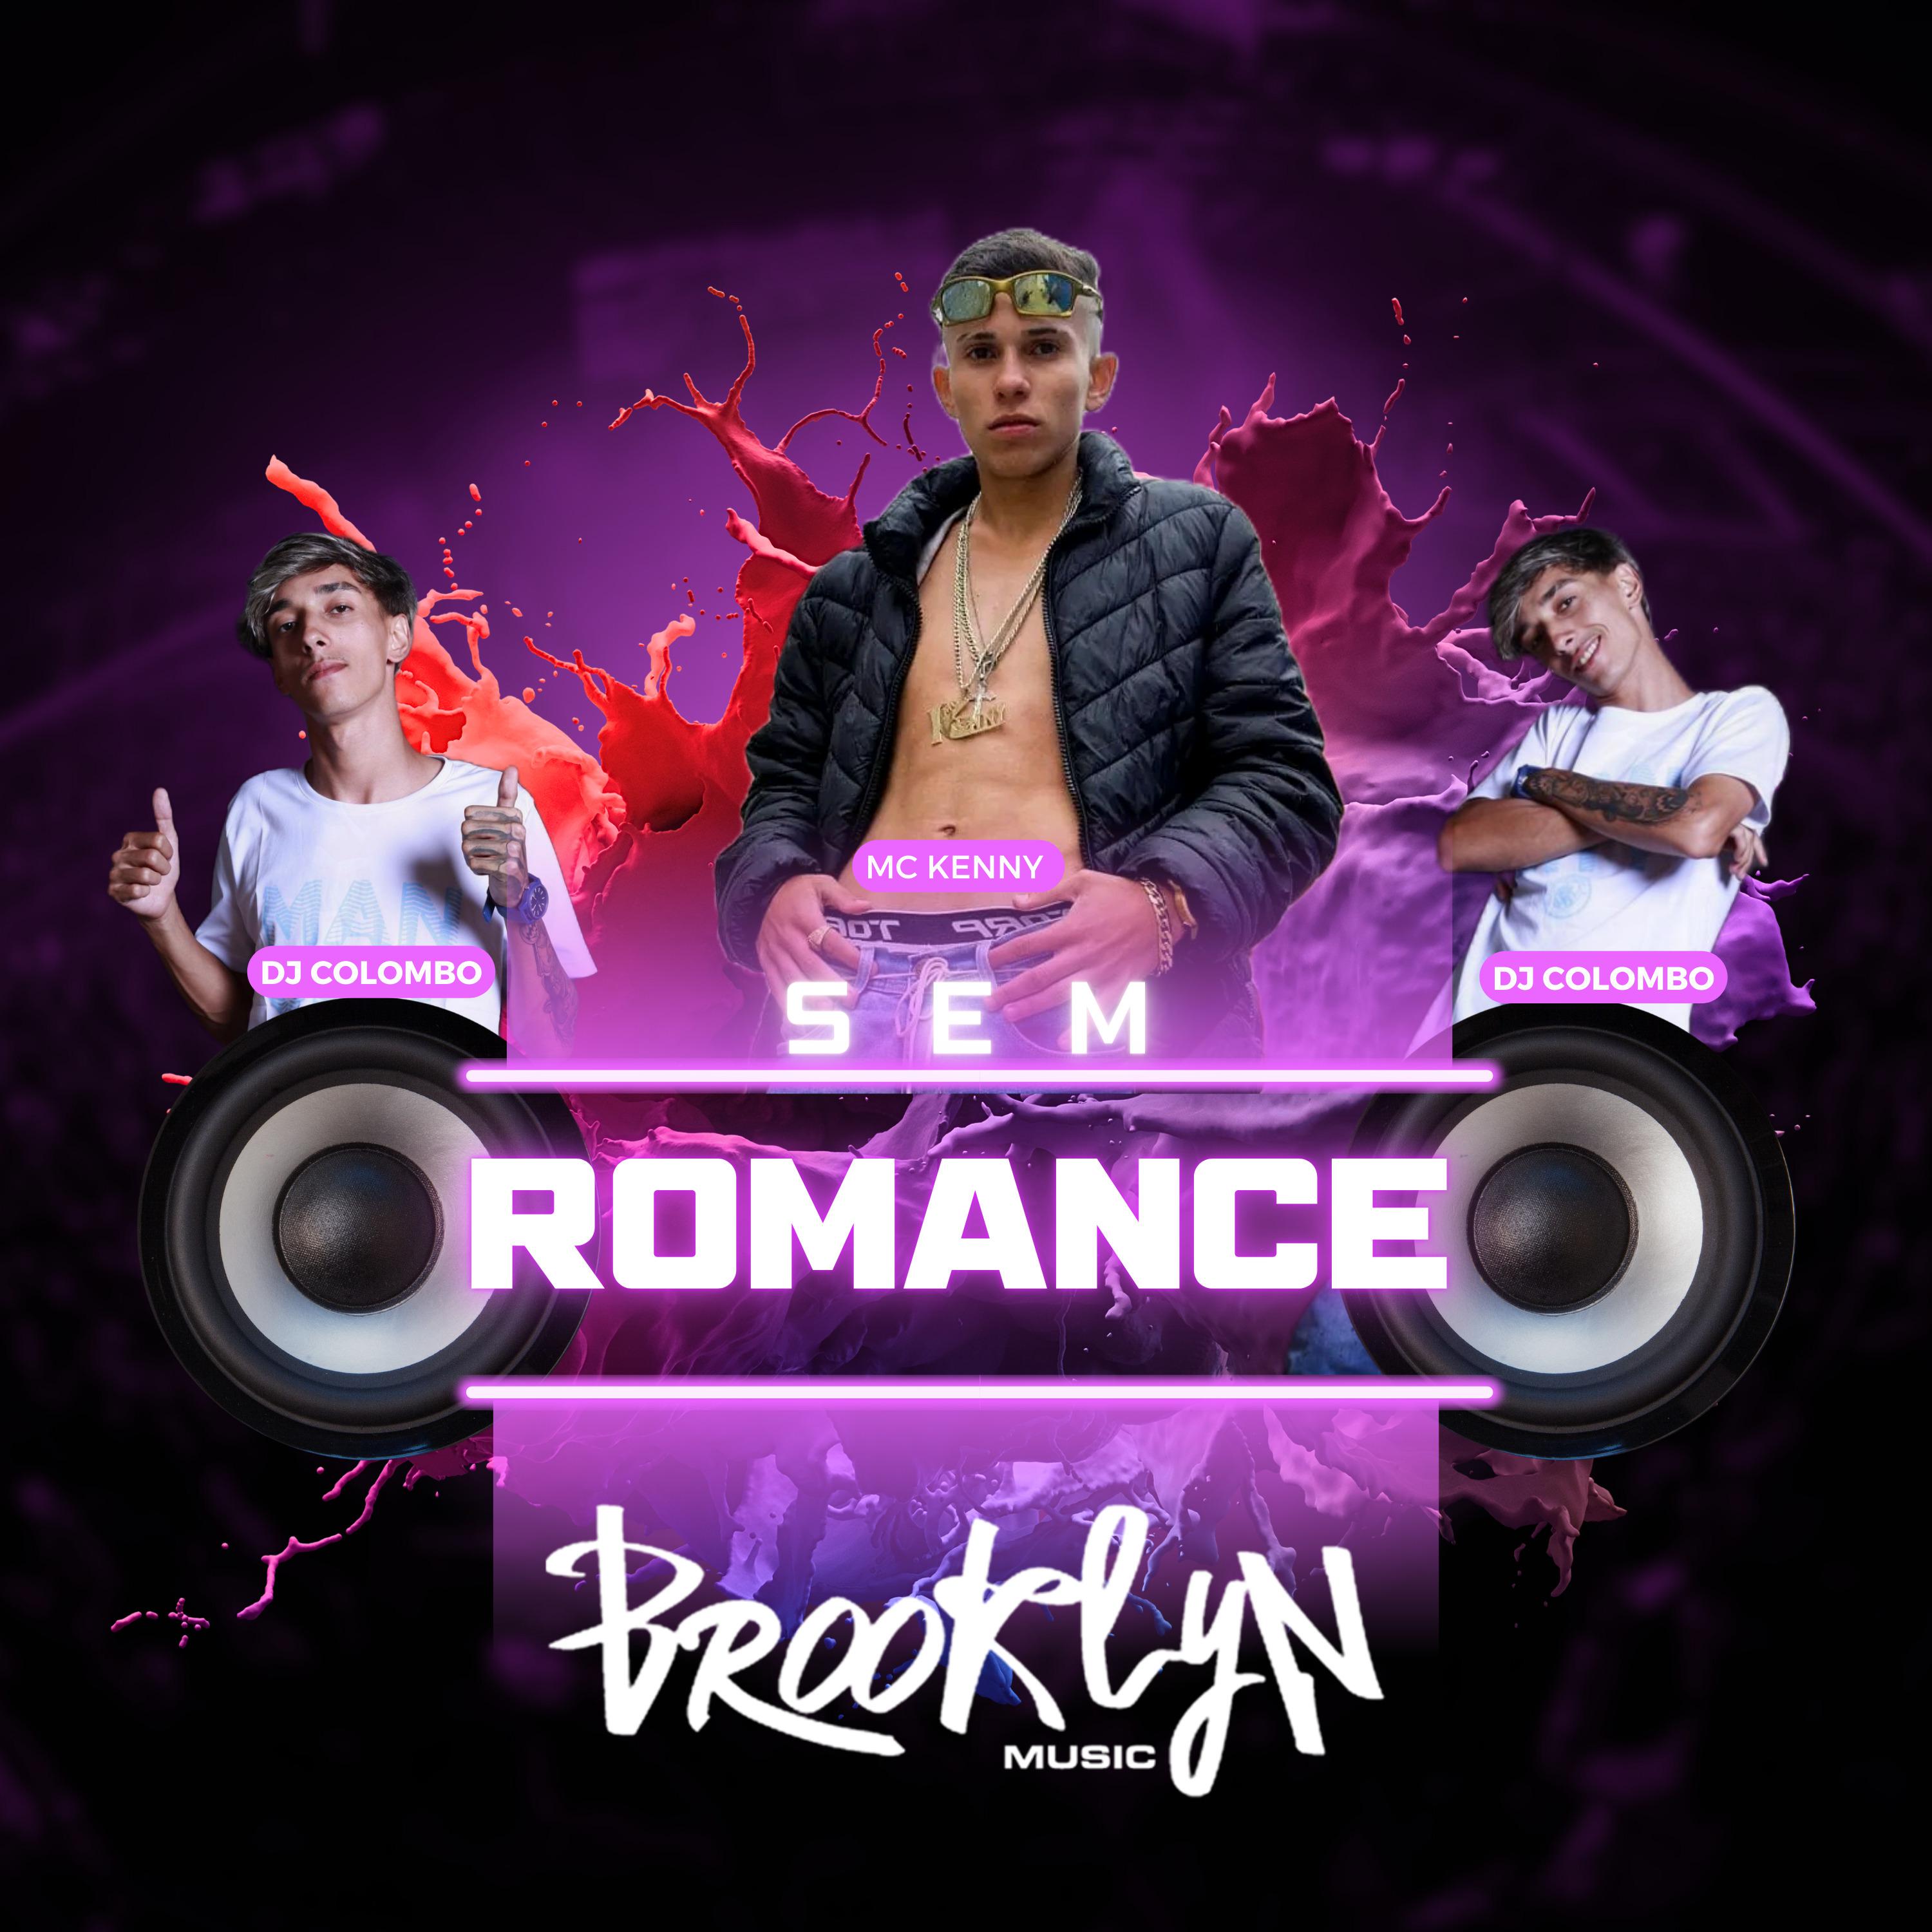 Постер альбома Sem Romance